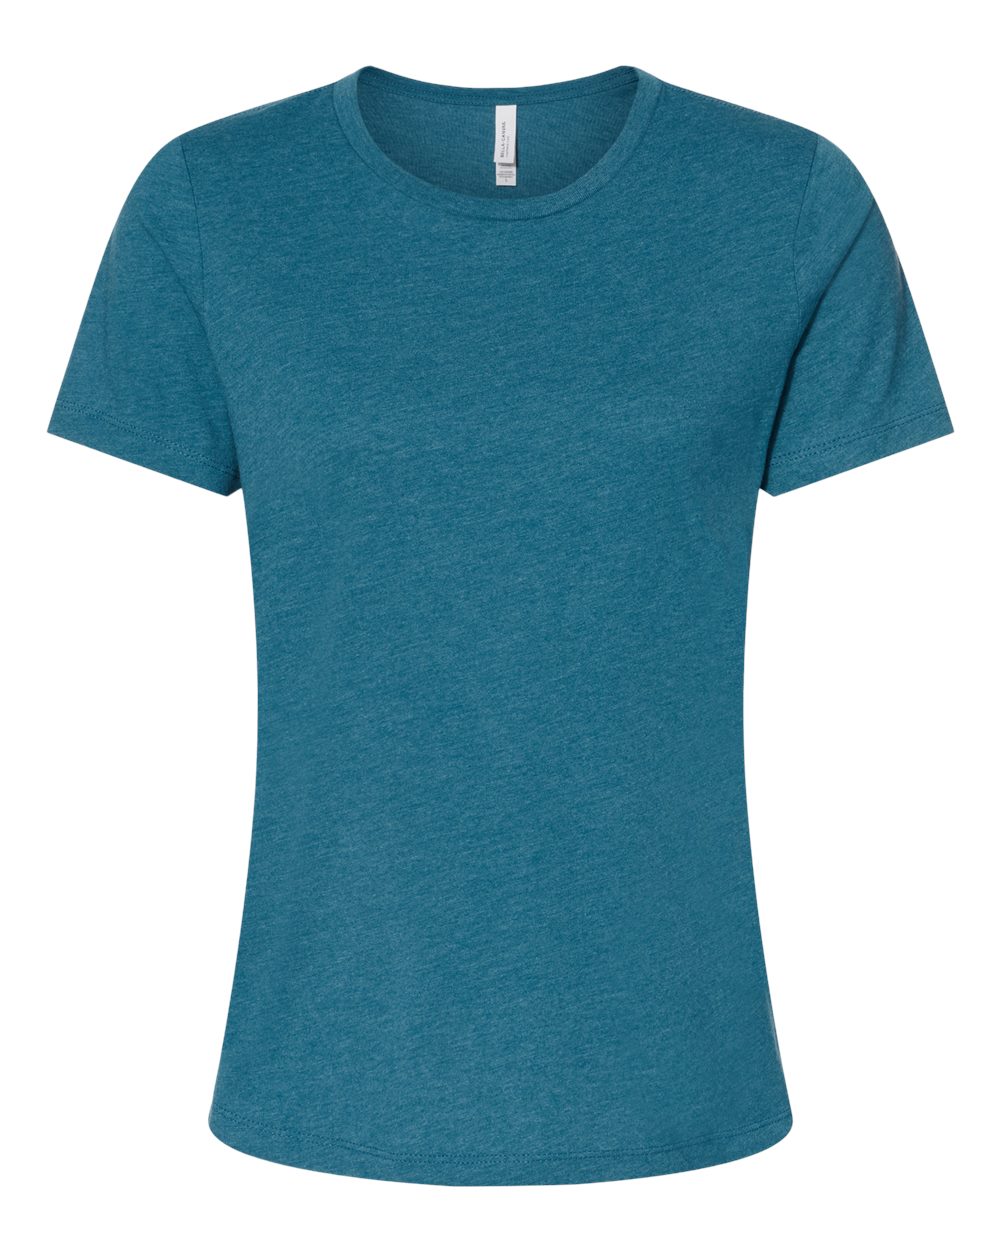 BELLA + CANVAS Women’s Relaxed Fit Heather CVC T Shirts Top 6400CVC up ...